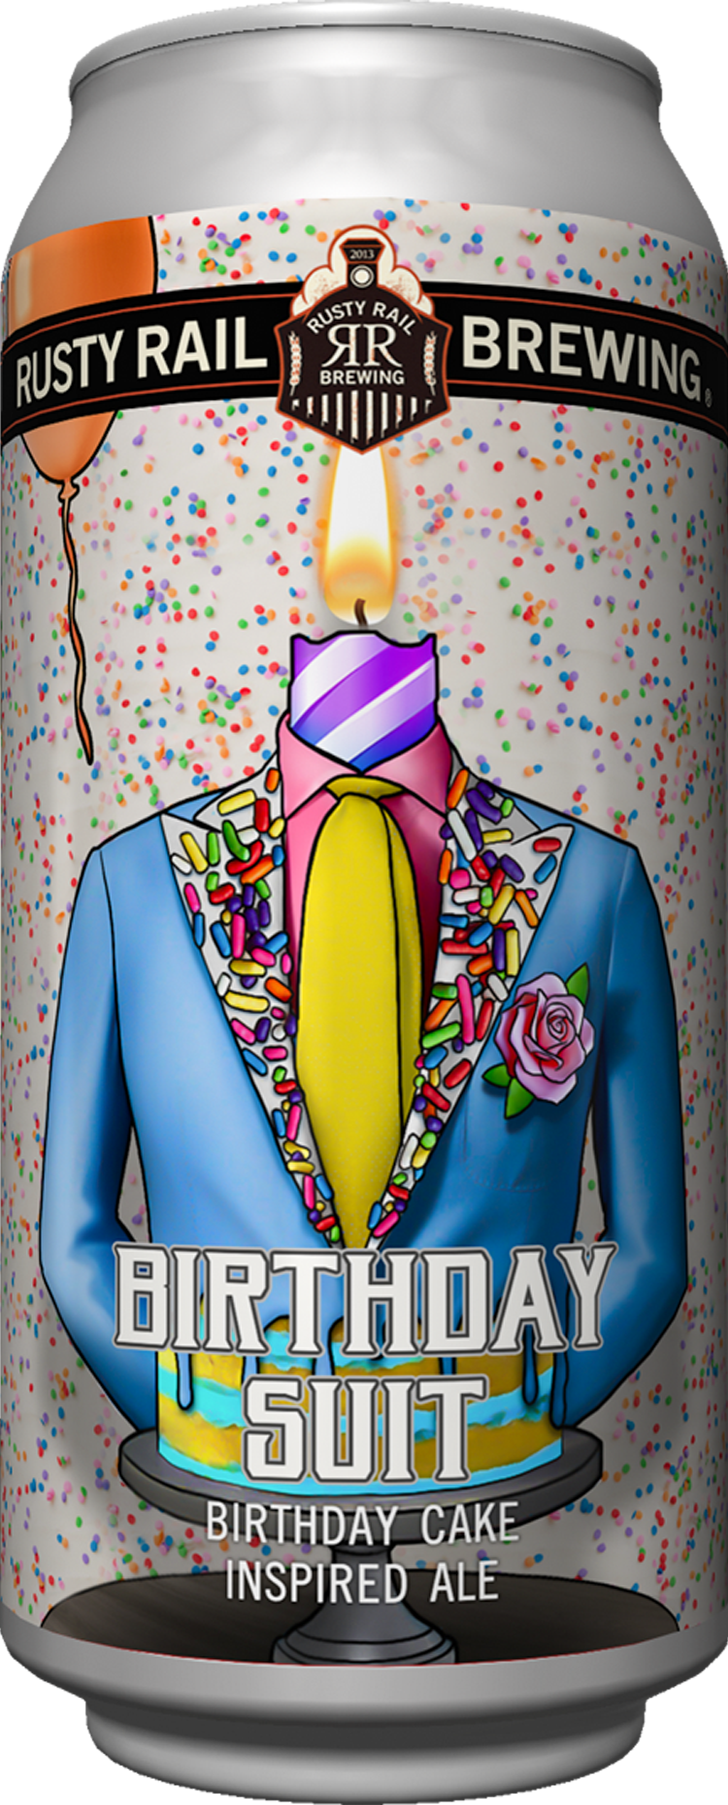 Birthday Suit - Birthday Cake Inspired Ale